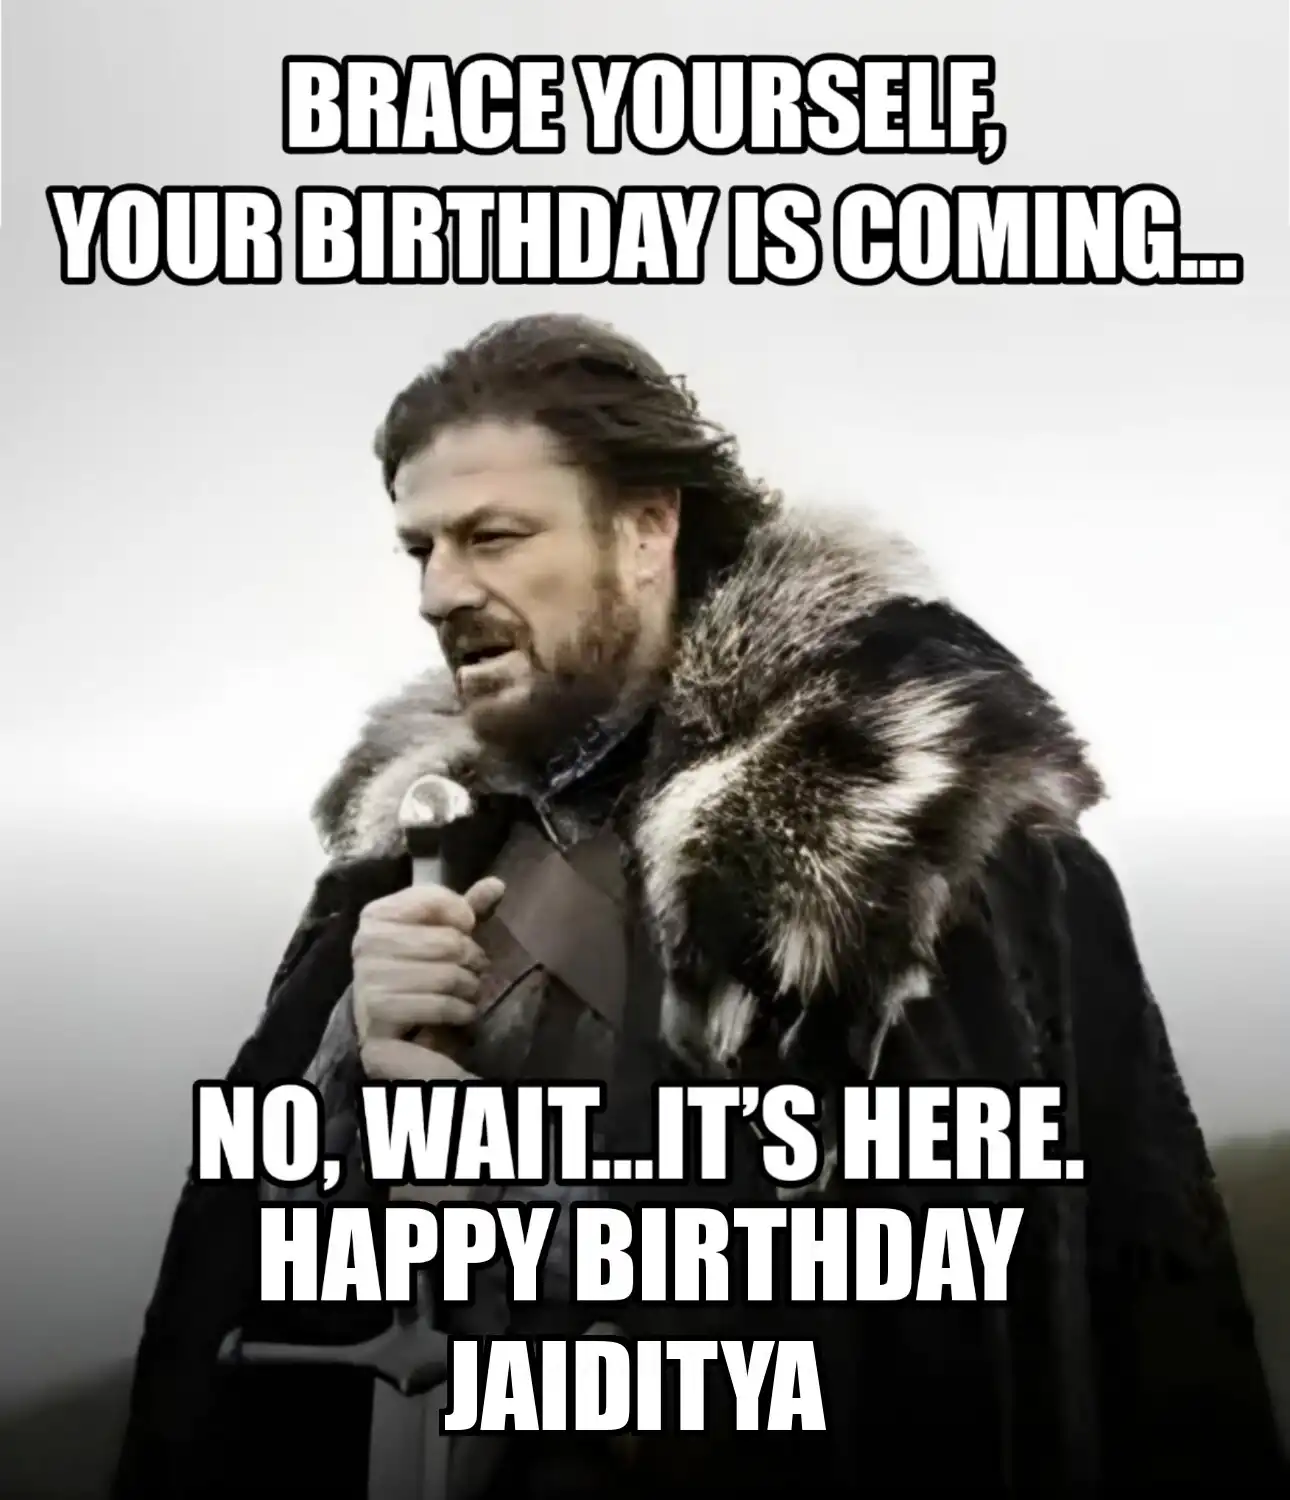 Happy Birthday Jaiditya Brace Yourself Your Birthday Is Coming Meme